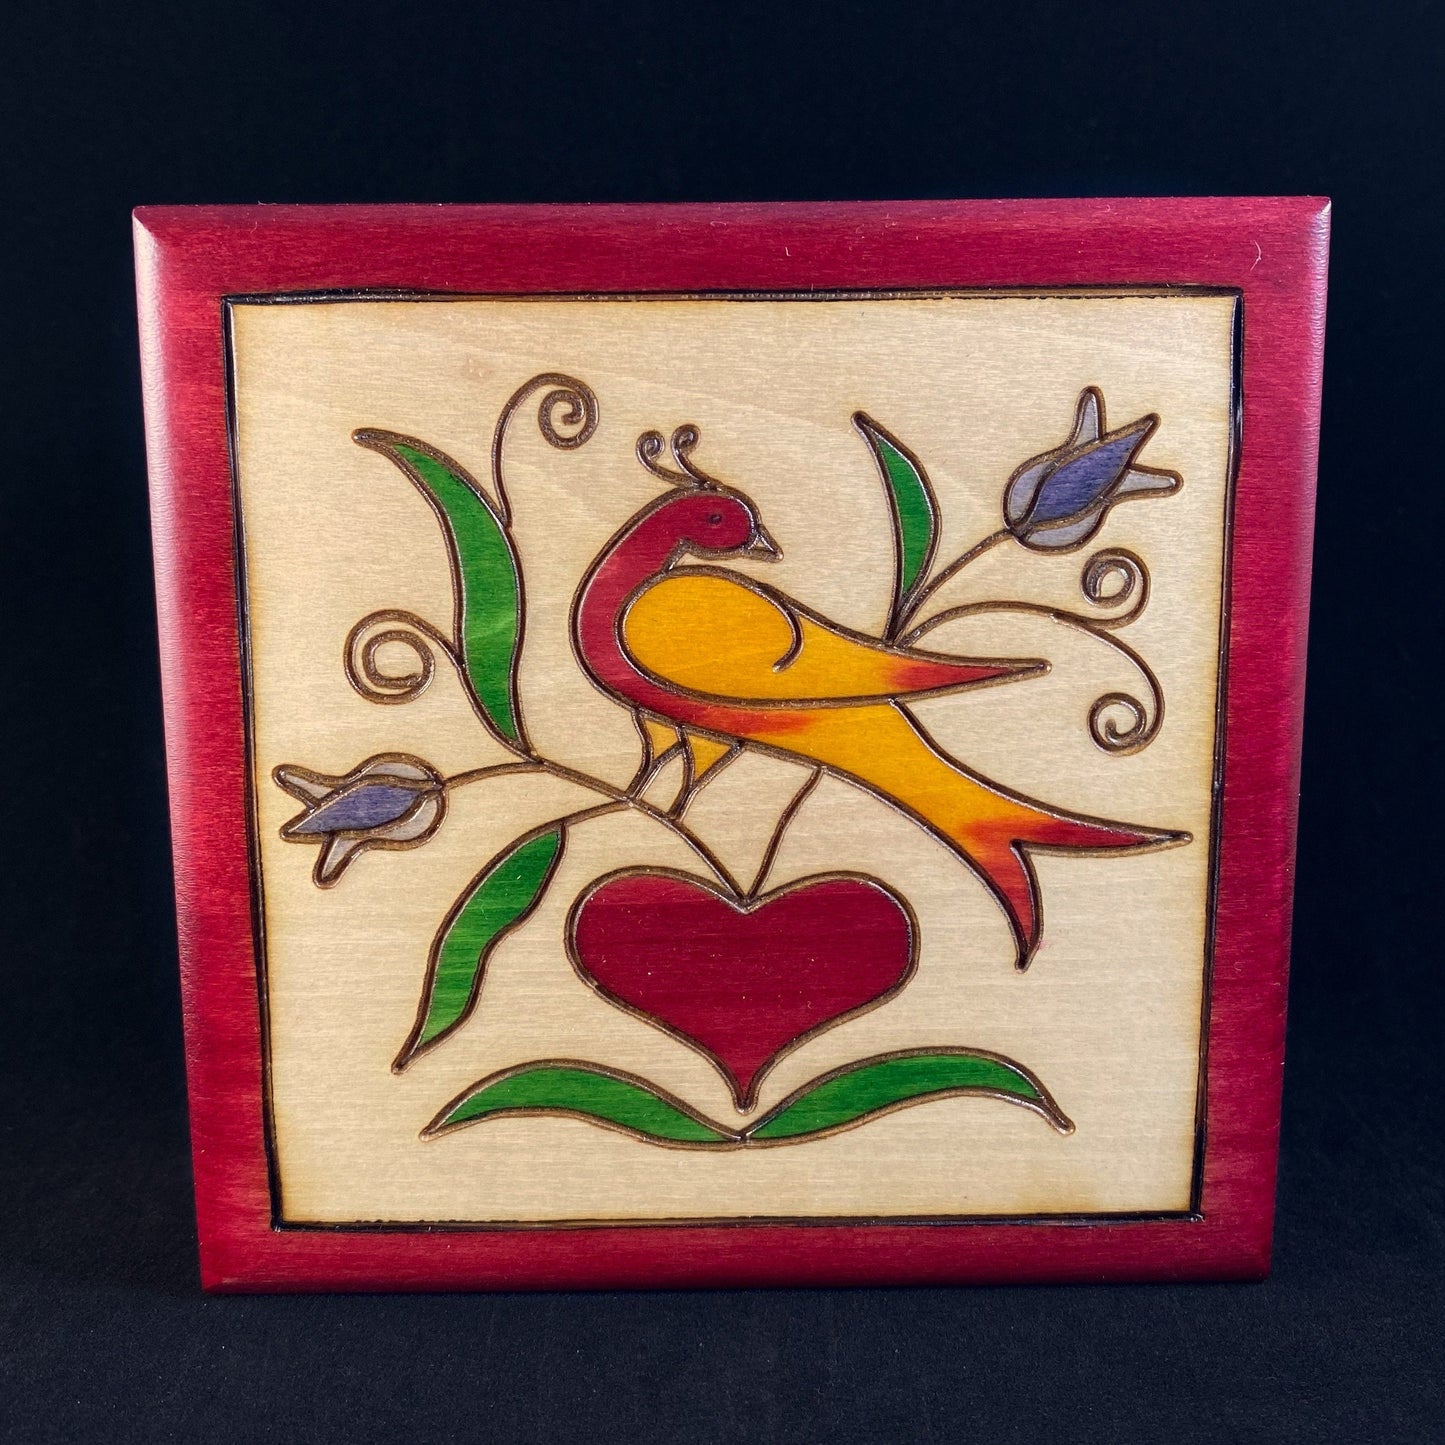 Bird, Flowers, and Heart Handmade Hinged Square Red Wooden Treasure Box